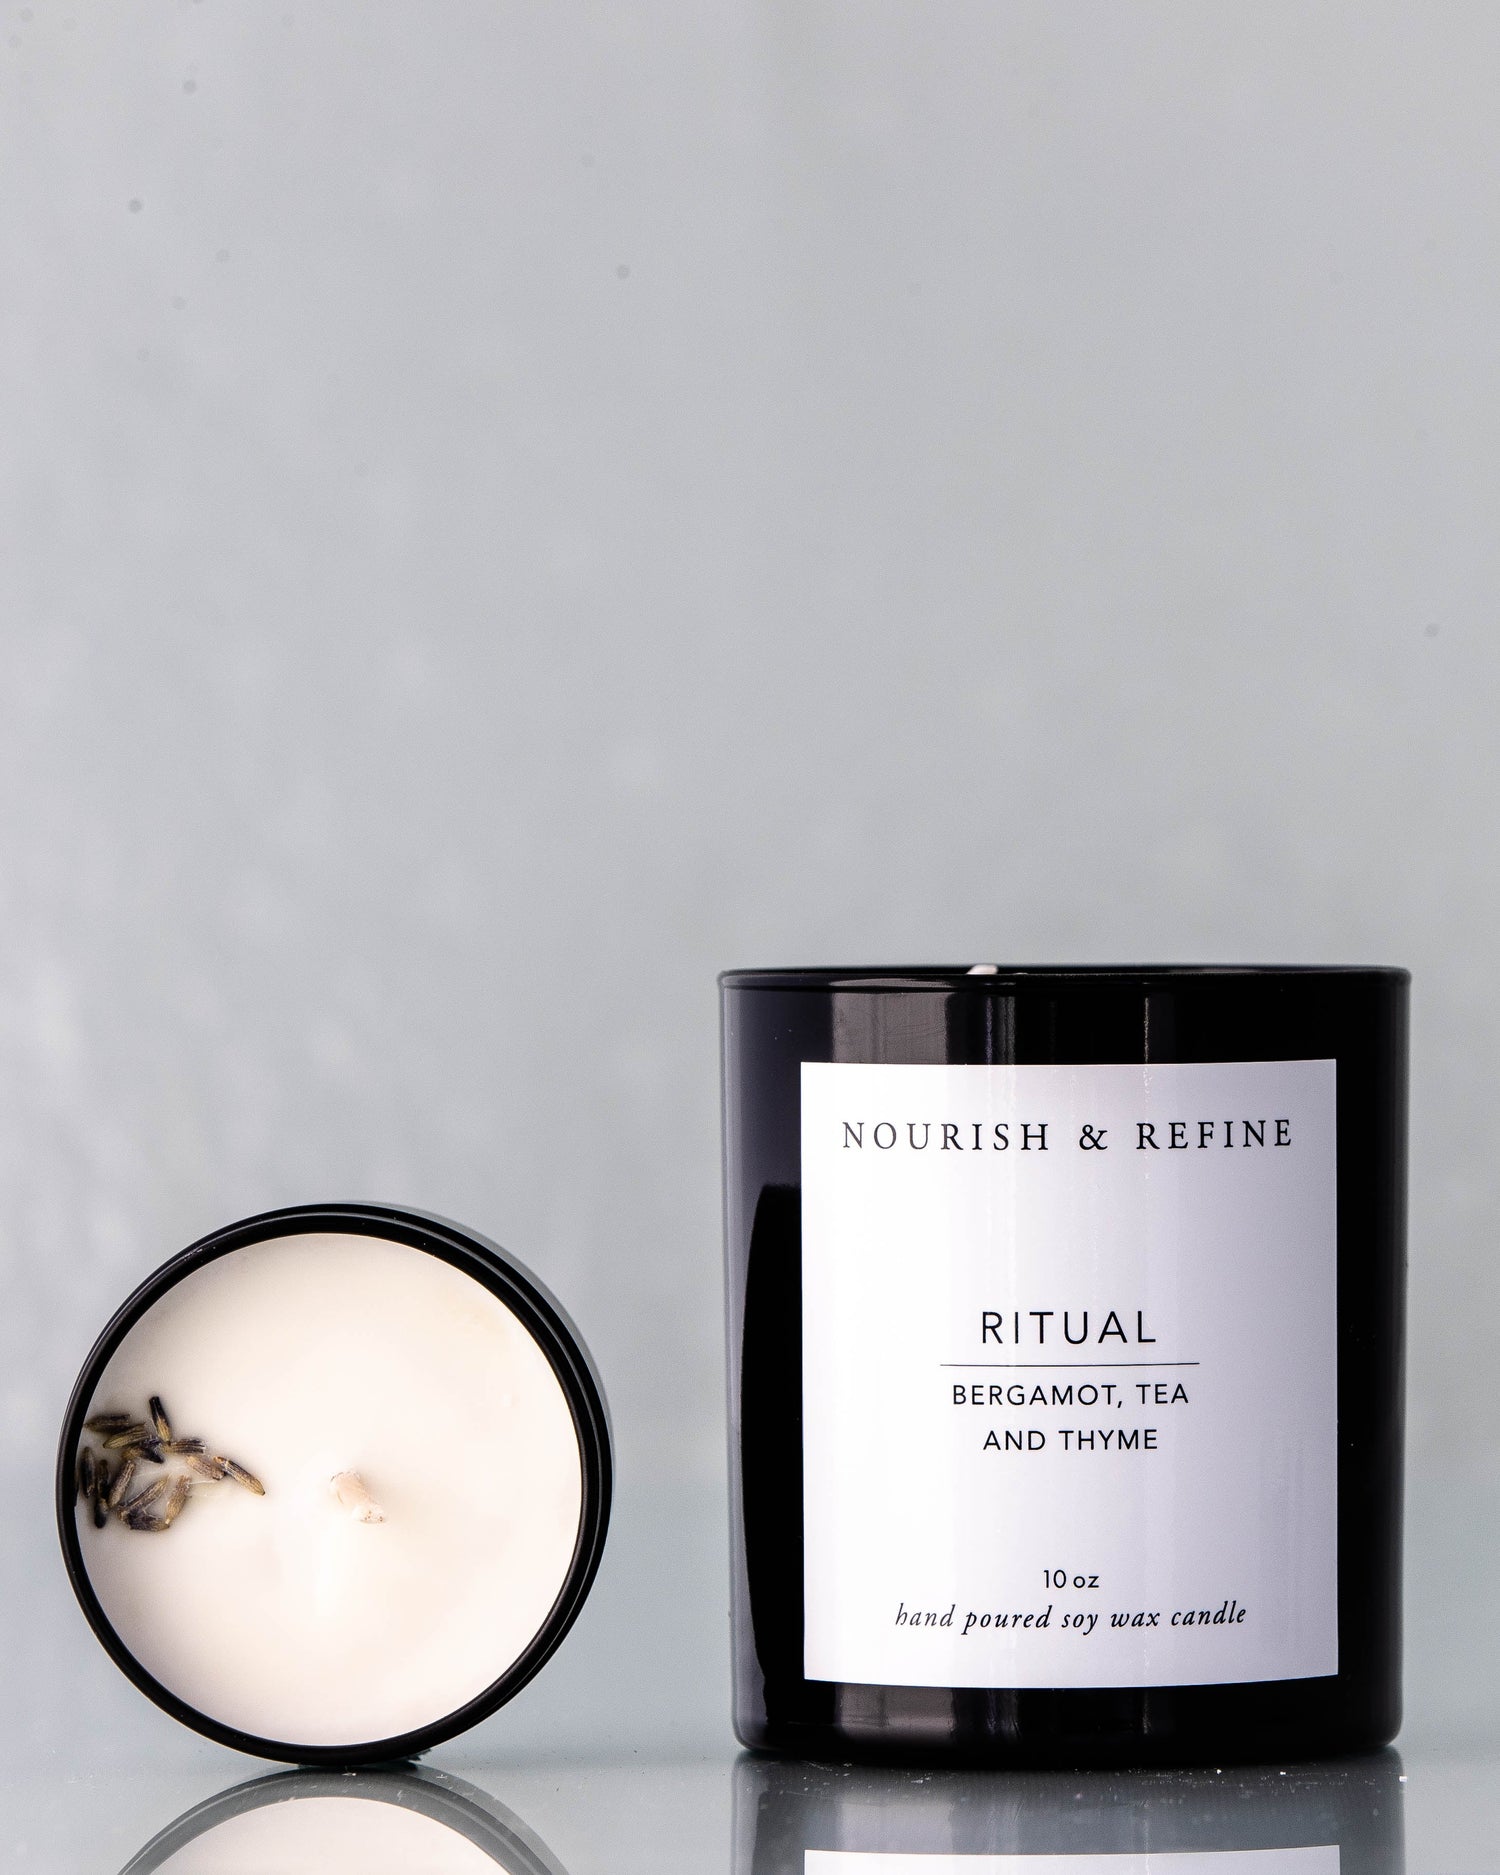 ritual bergamot, tea and thyme candle